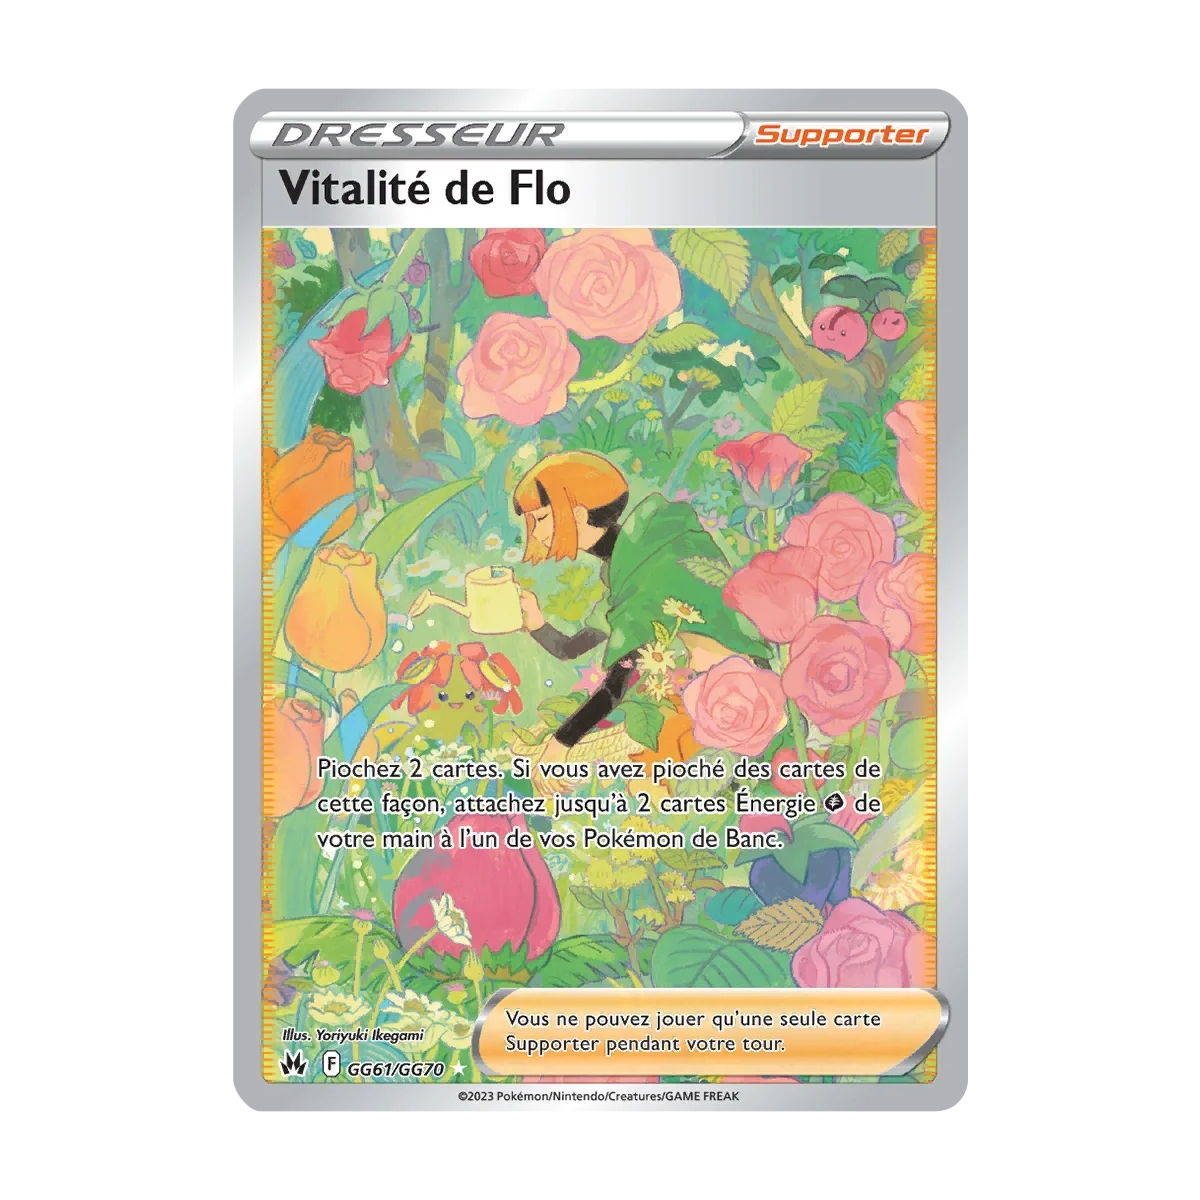 Carte Vitalité de Flo - Galerie de Galar ultra rare de Pokémon Zénith Suprême GG61/GG70